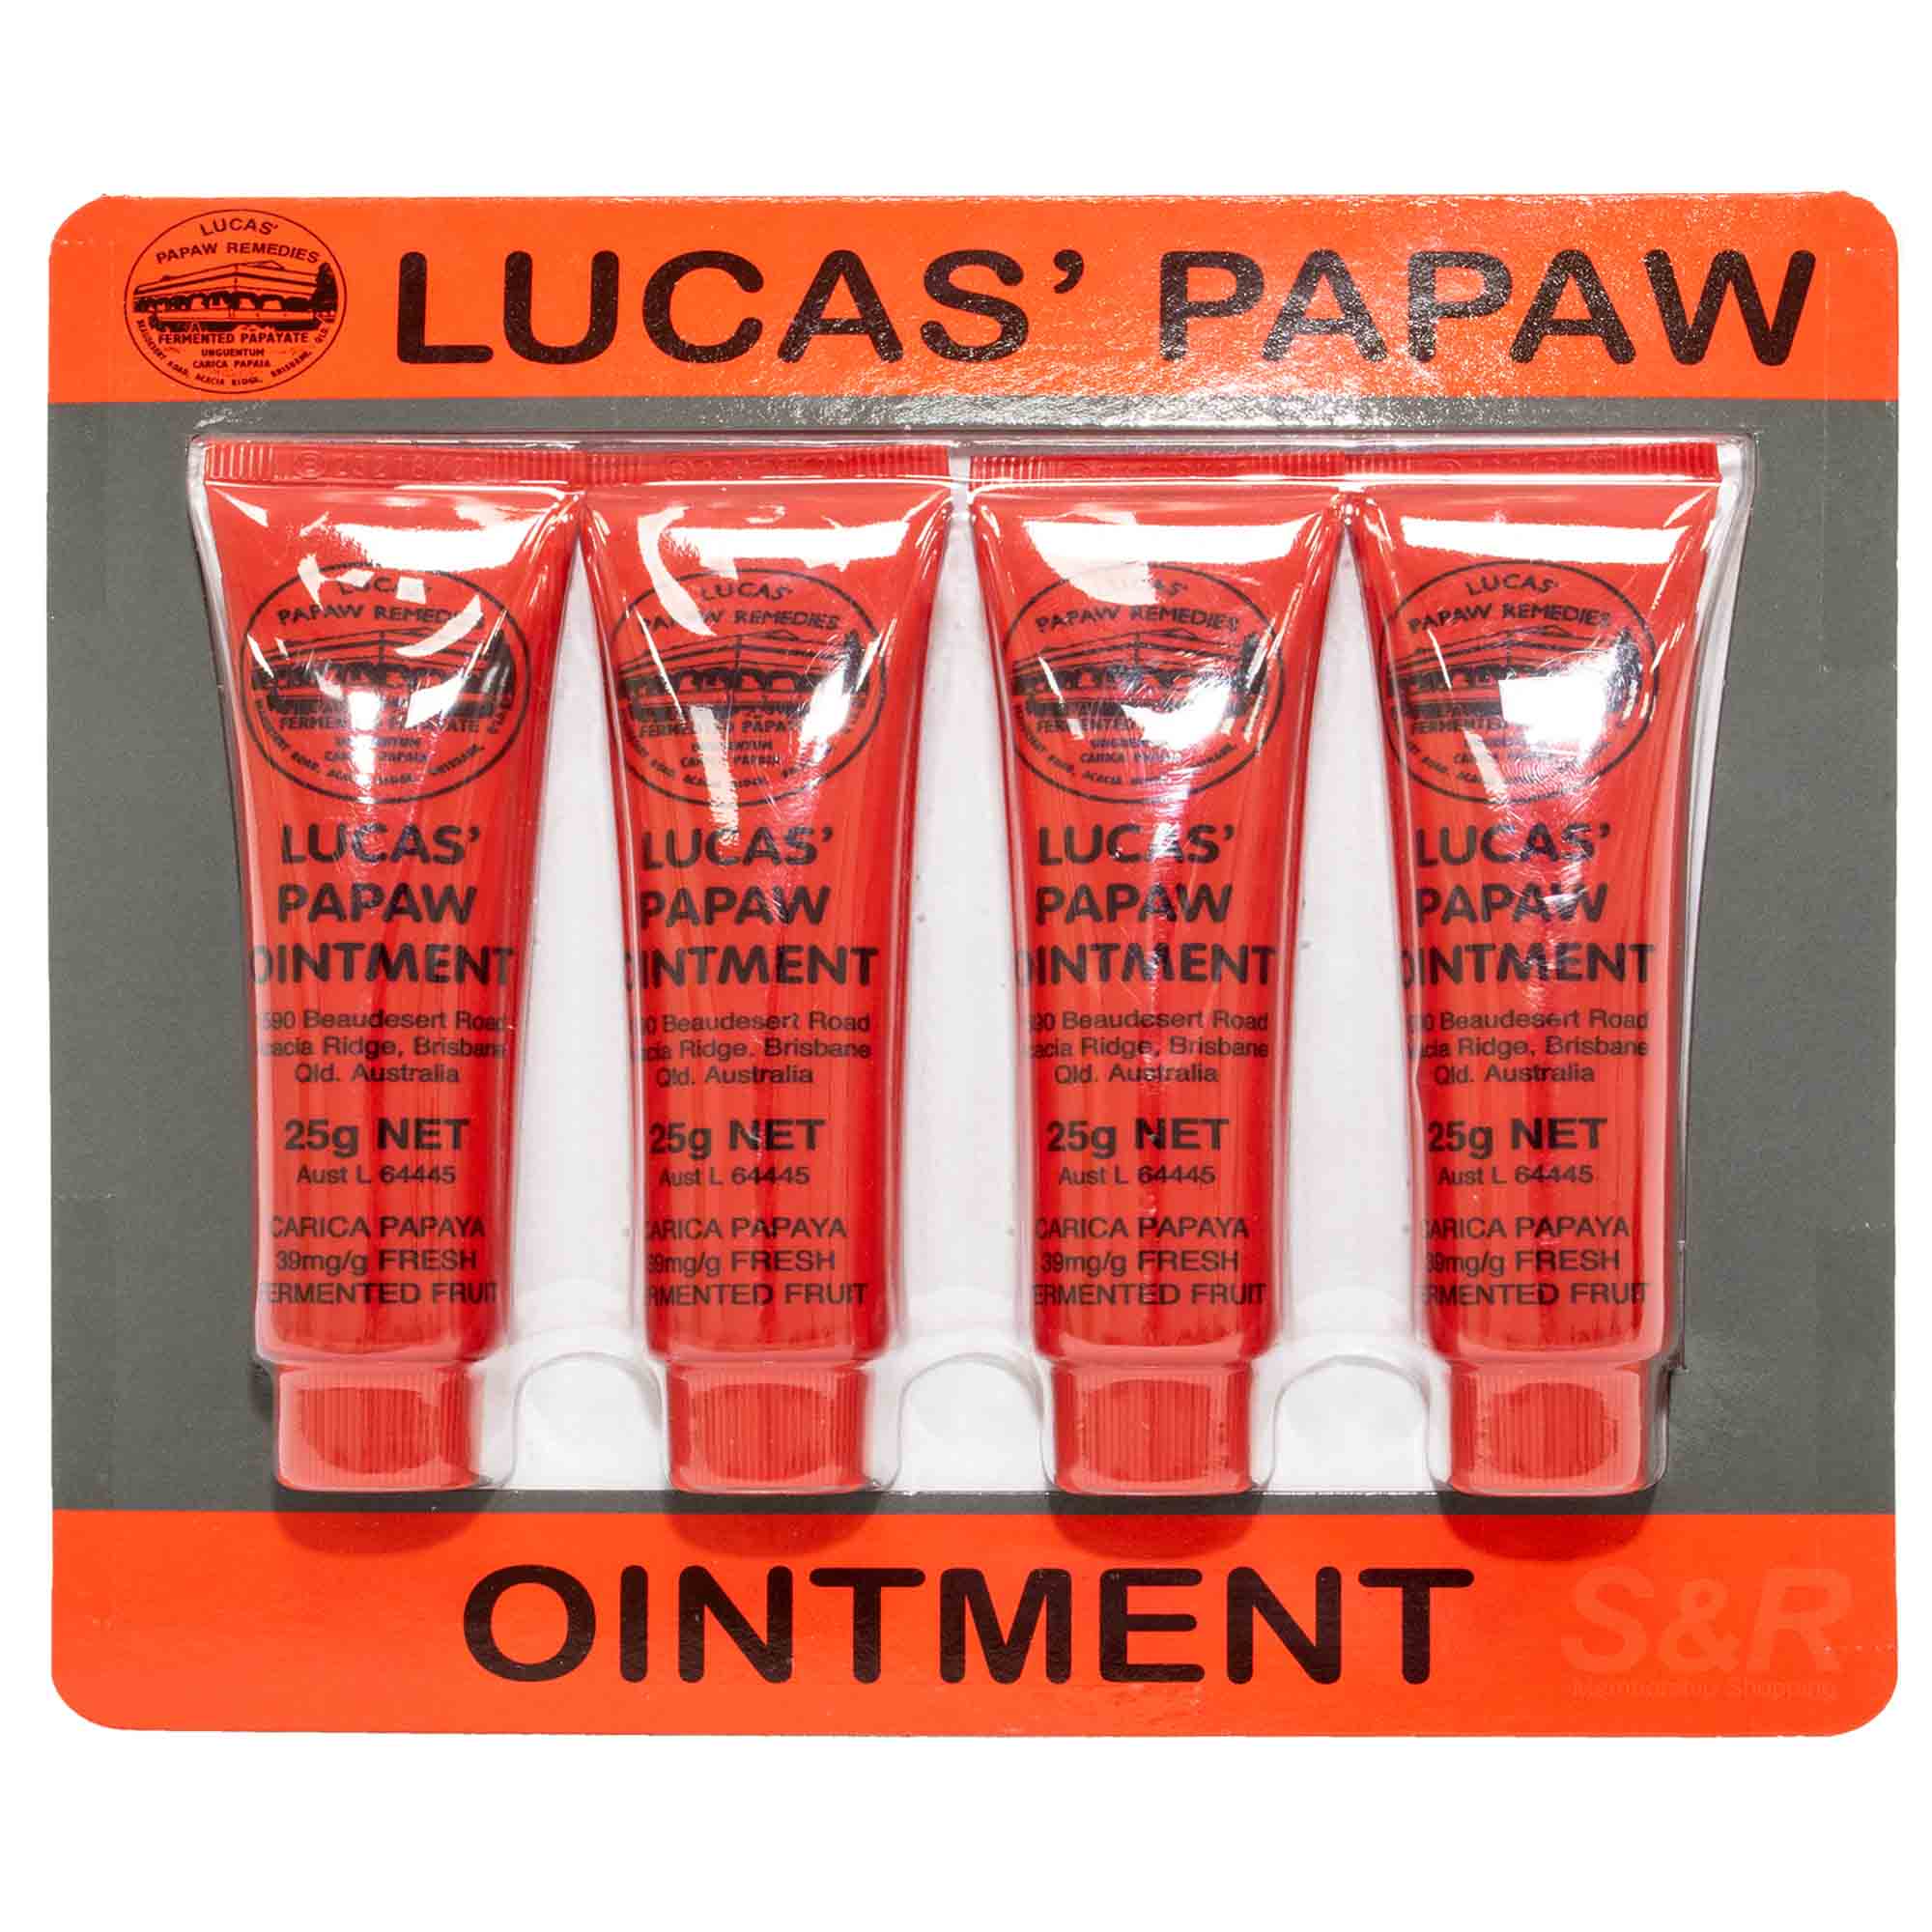 Lucas Papaw Carica Papaya Fresh Fermented Fruit Ointment 4pcs